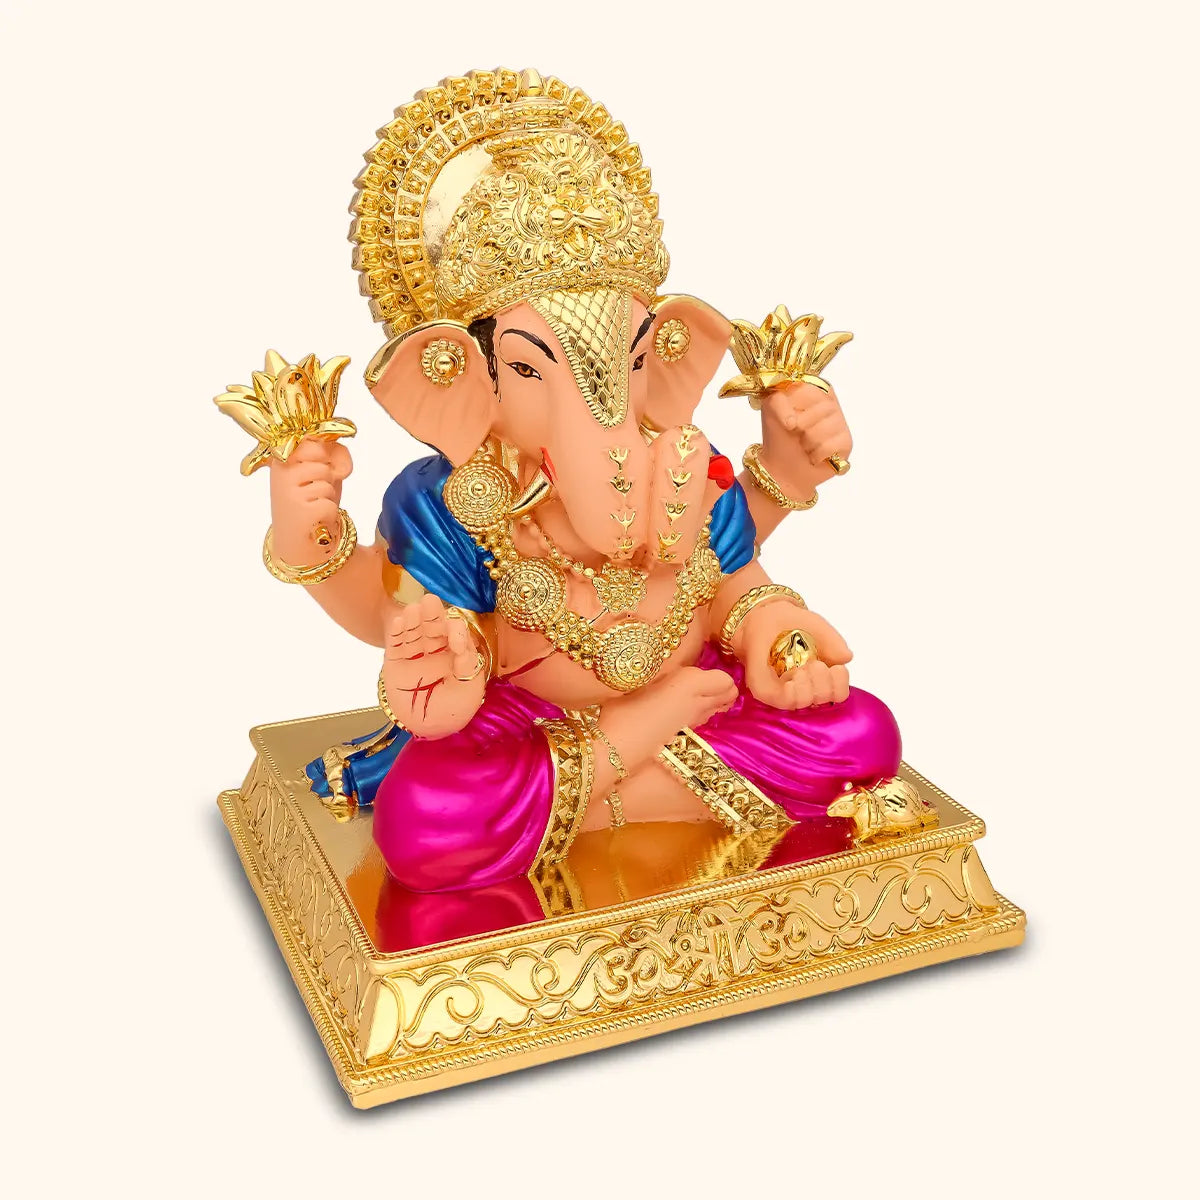 Buy Lord Ganesha Gifting Statue Gift Online at ₹949